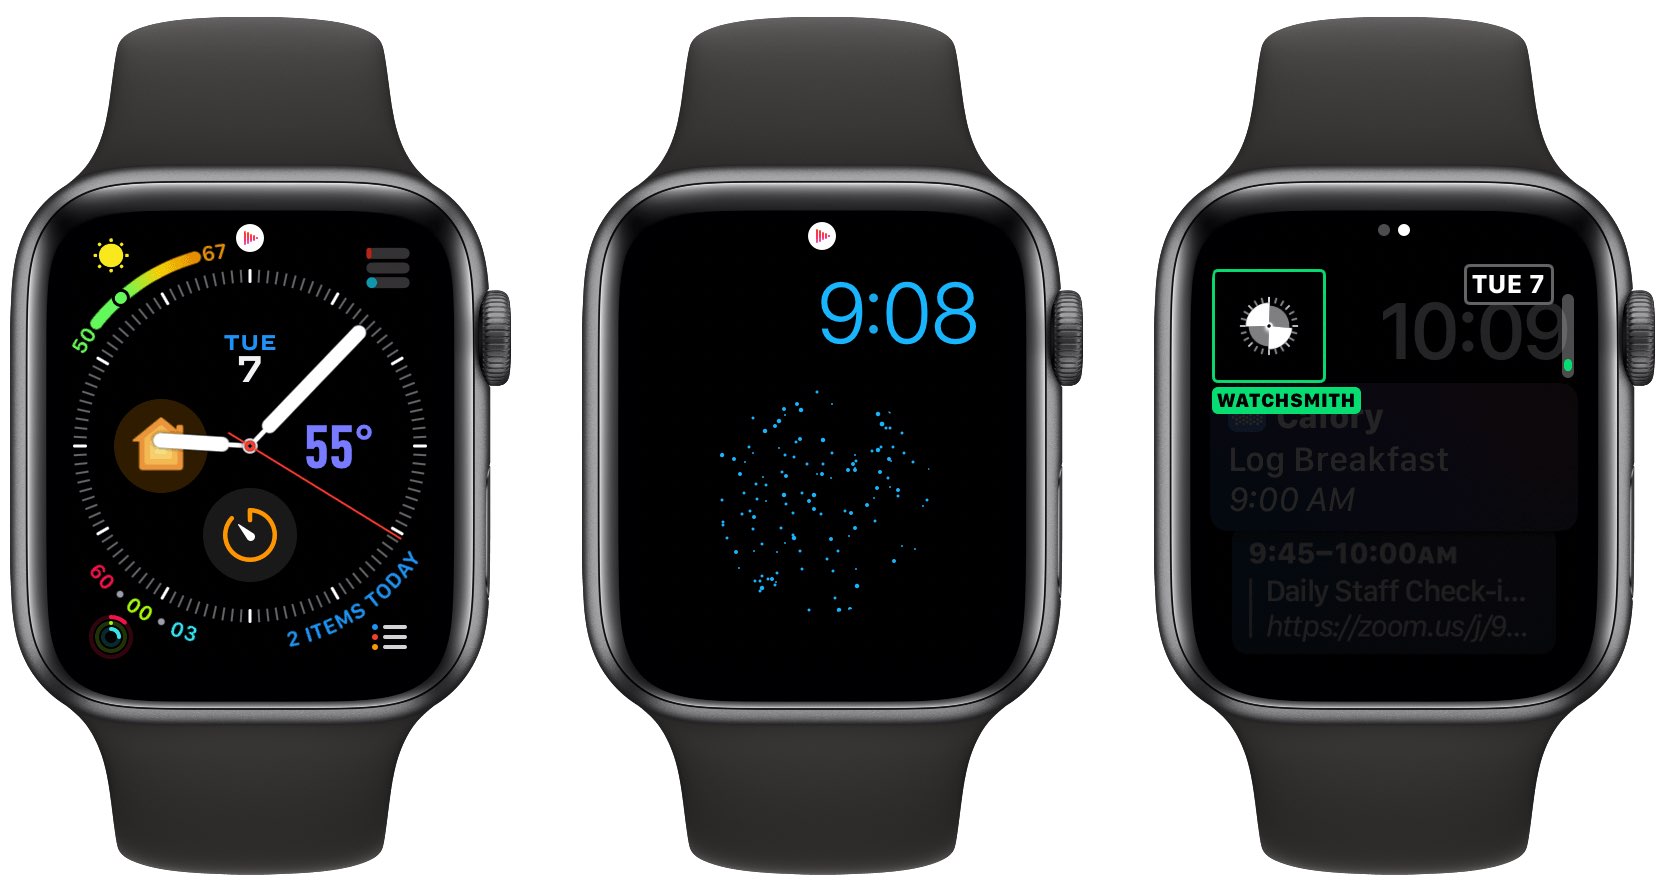 Apple Watch complications Watchsmith app